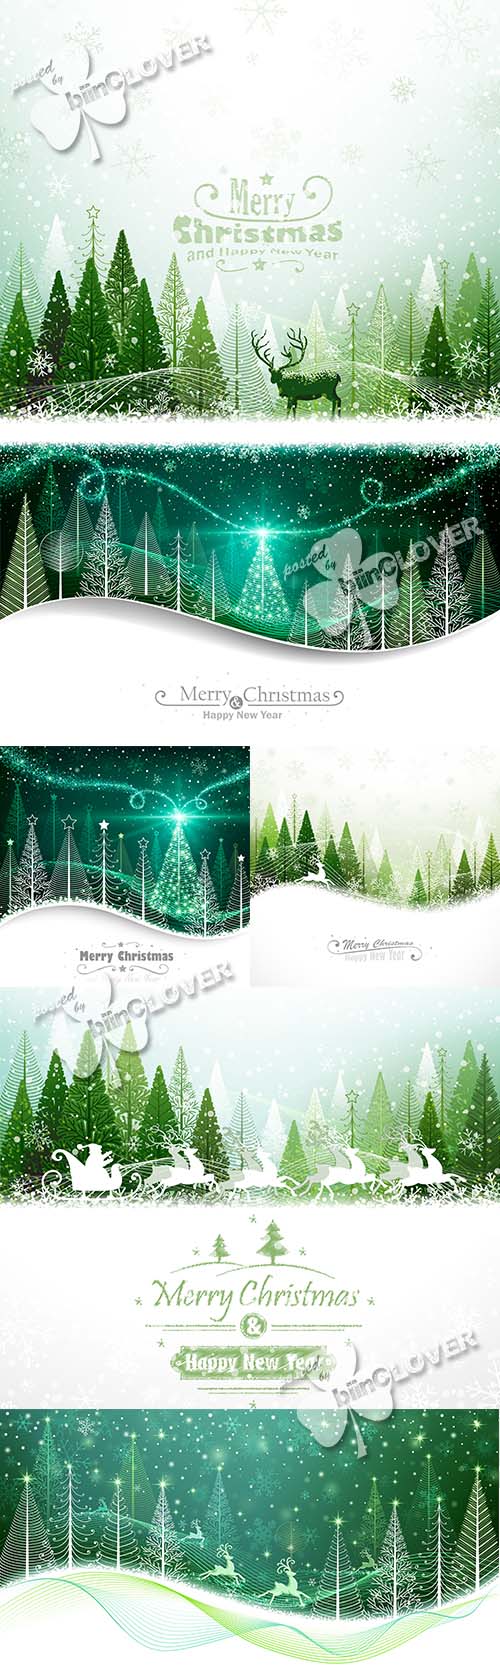 Merry Christmas cards 0544